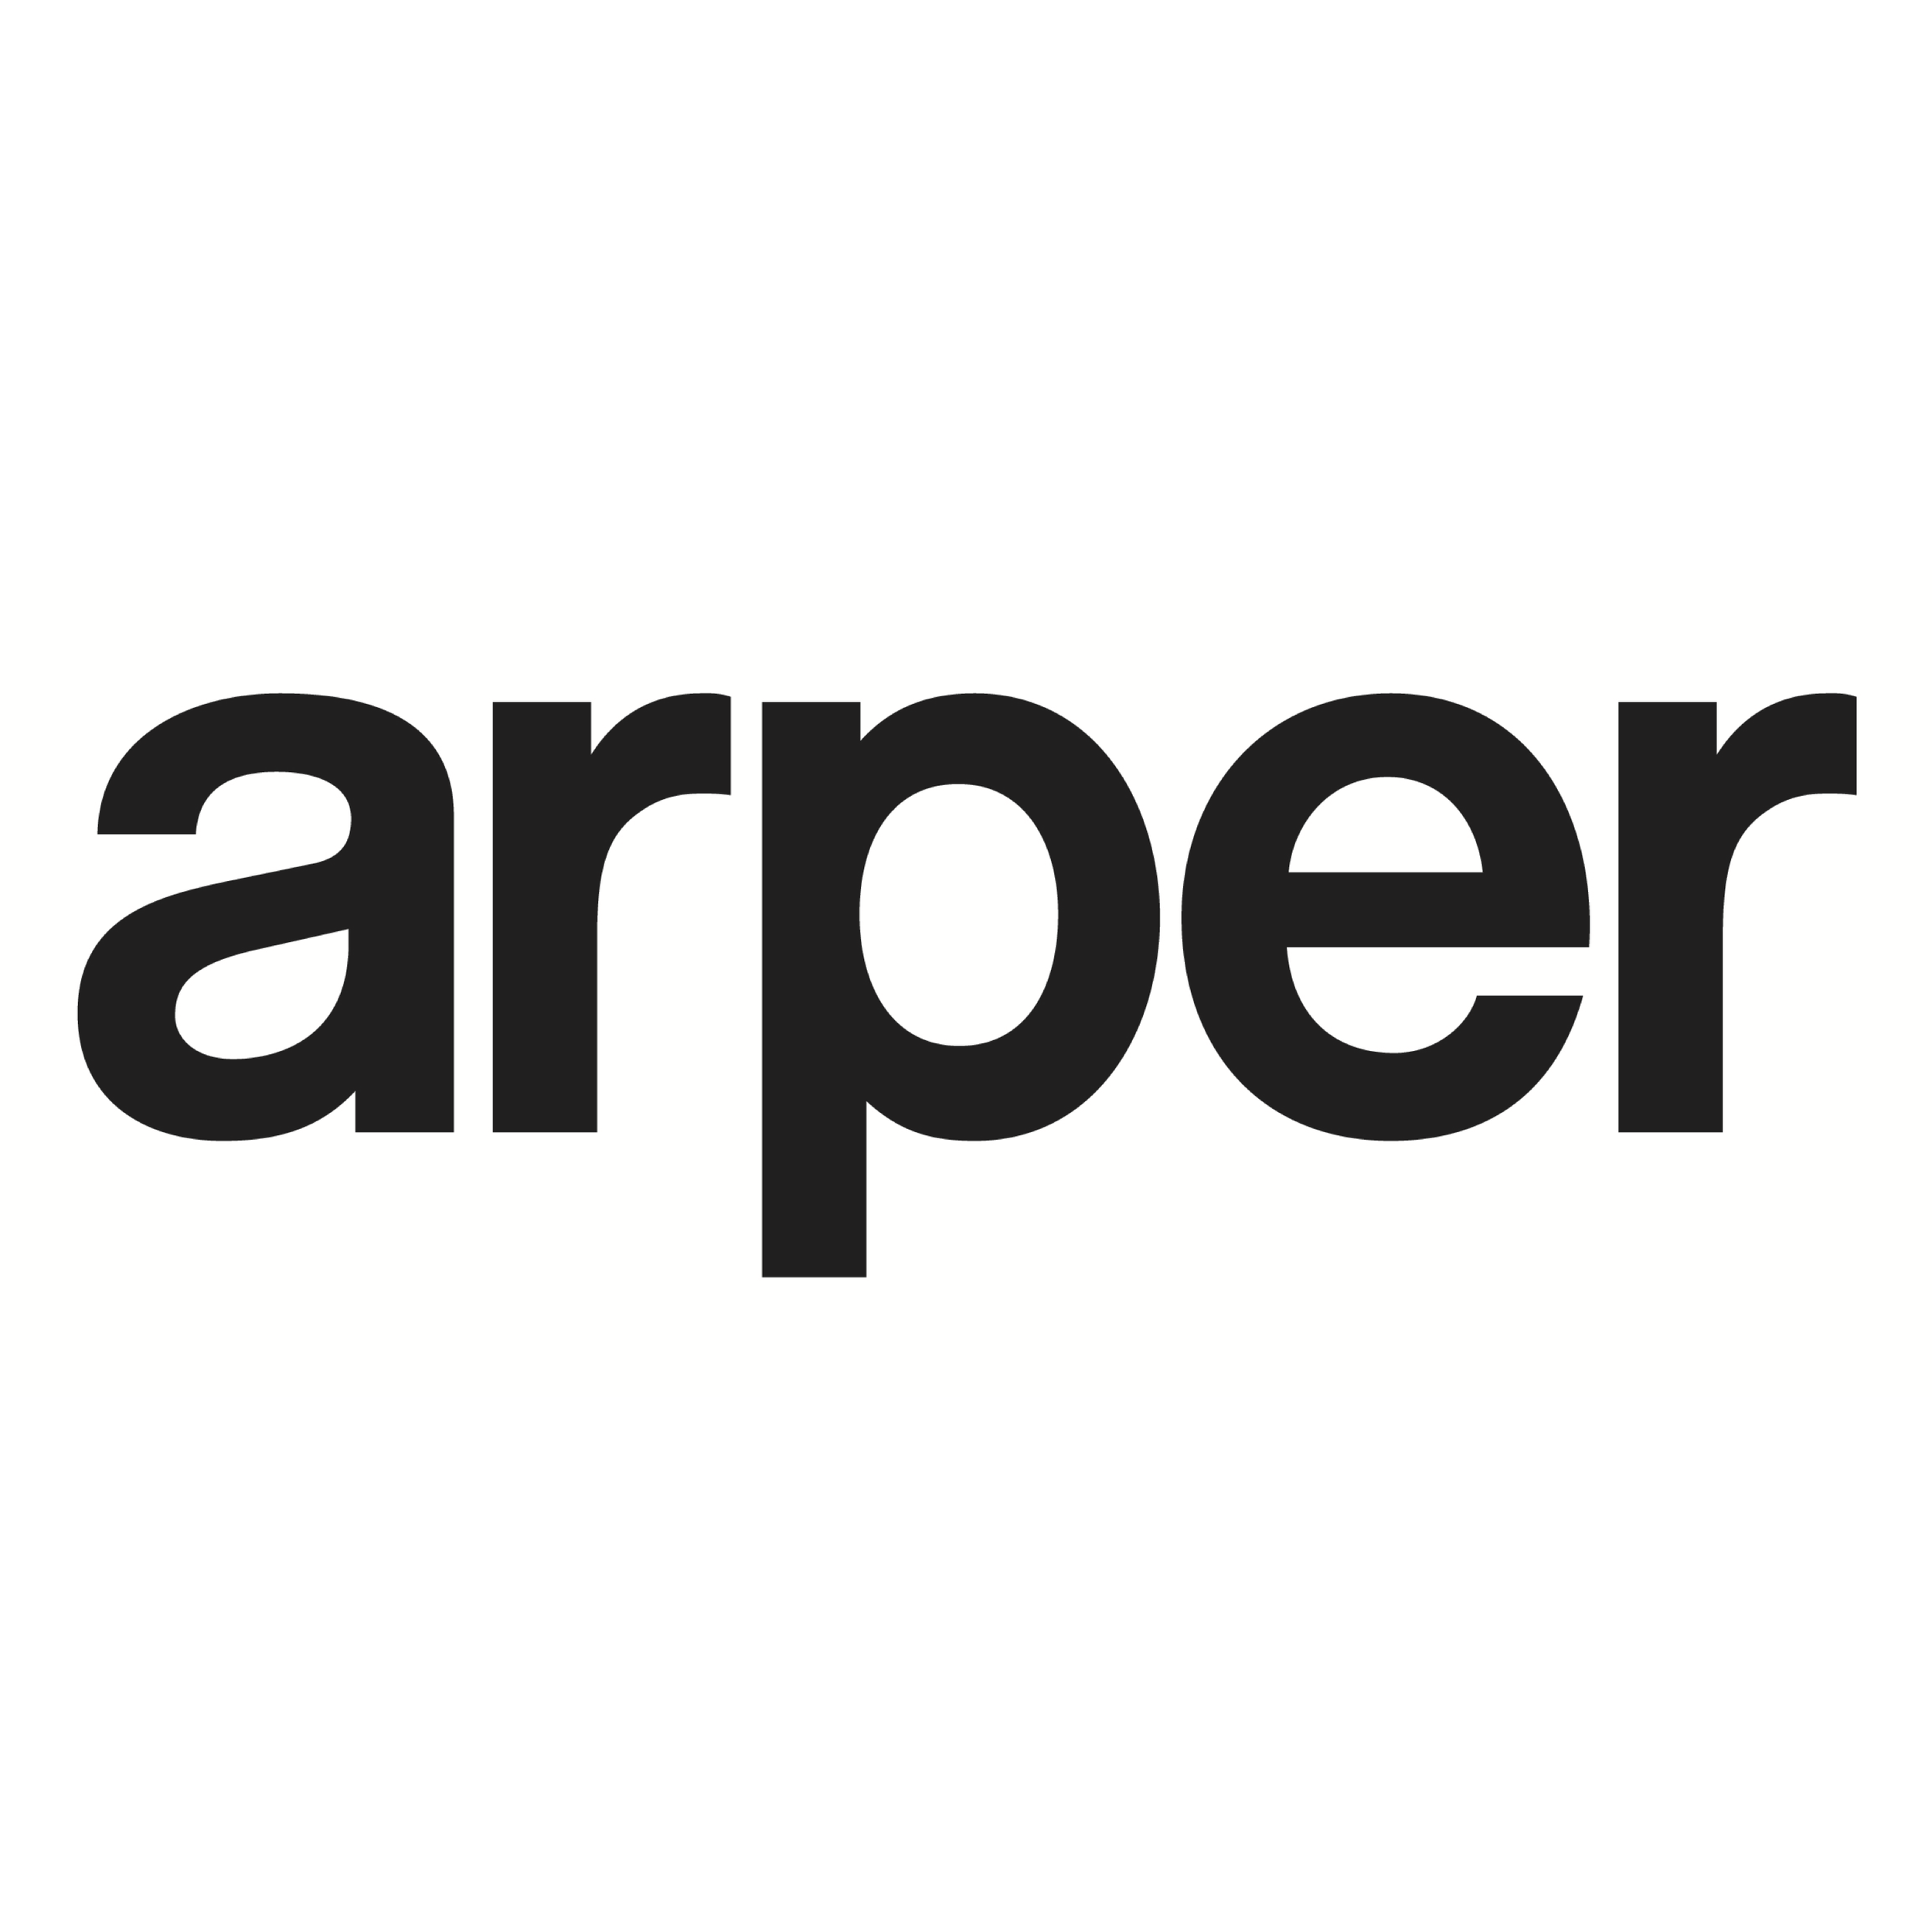 SILVER - Arper.png